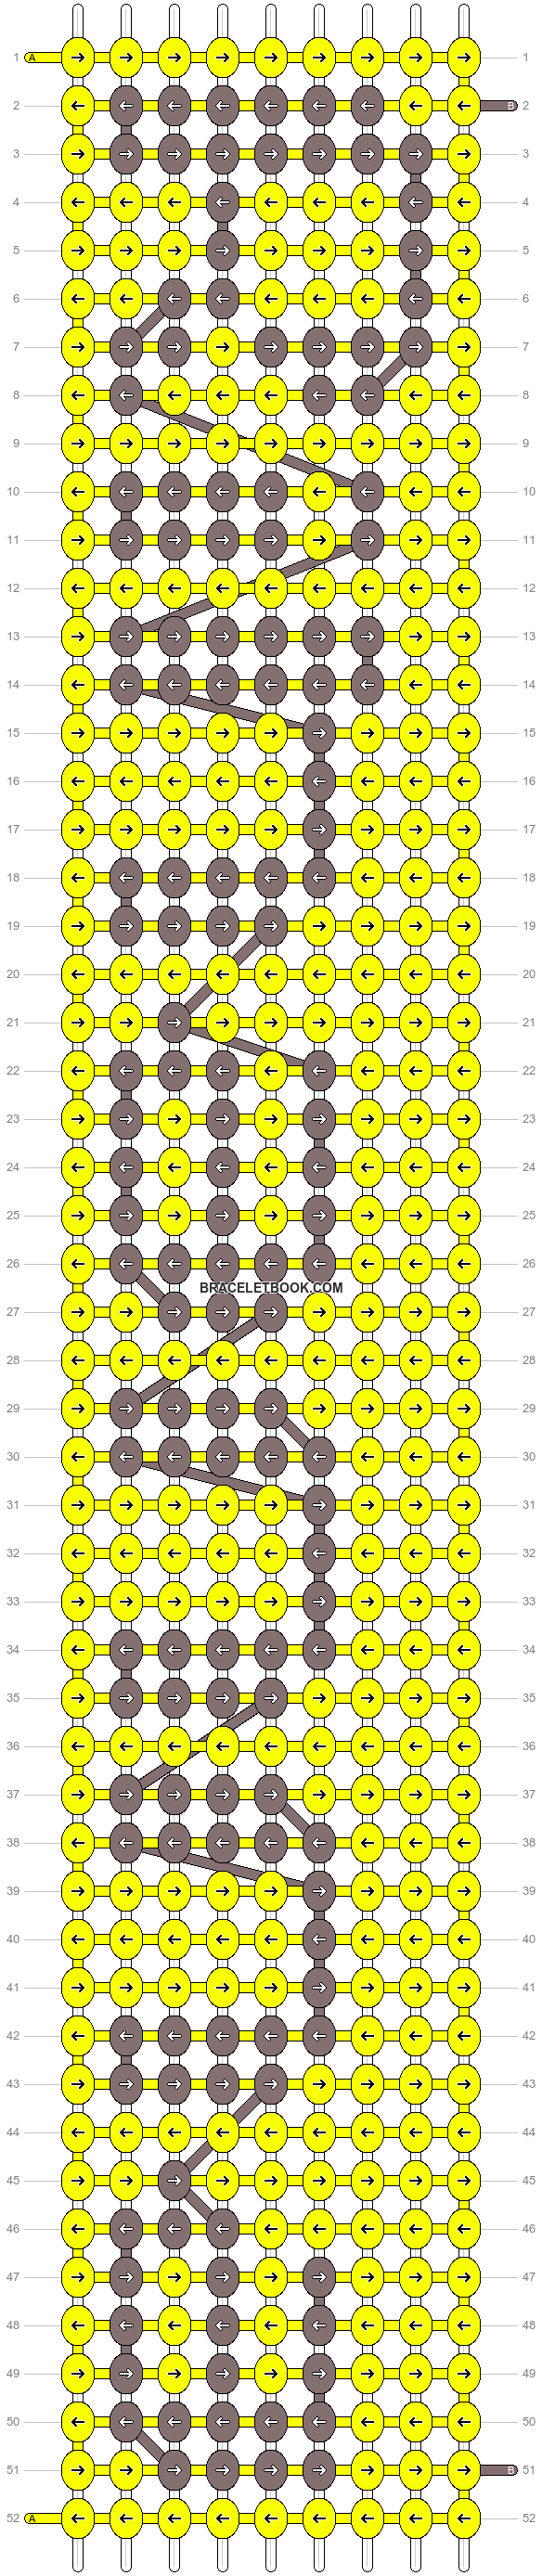 Alpha pattern #555 variation #127727 pattern